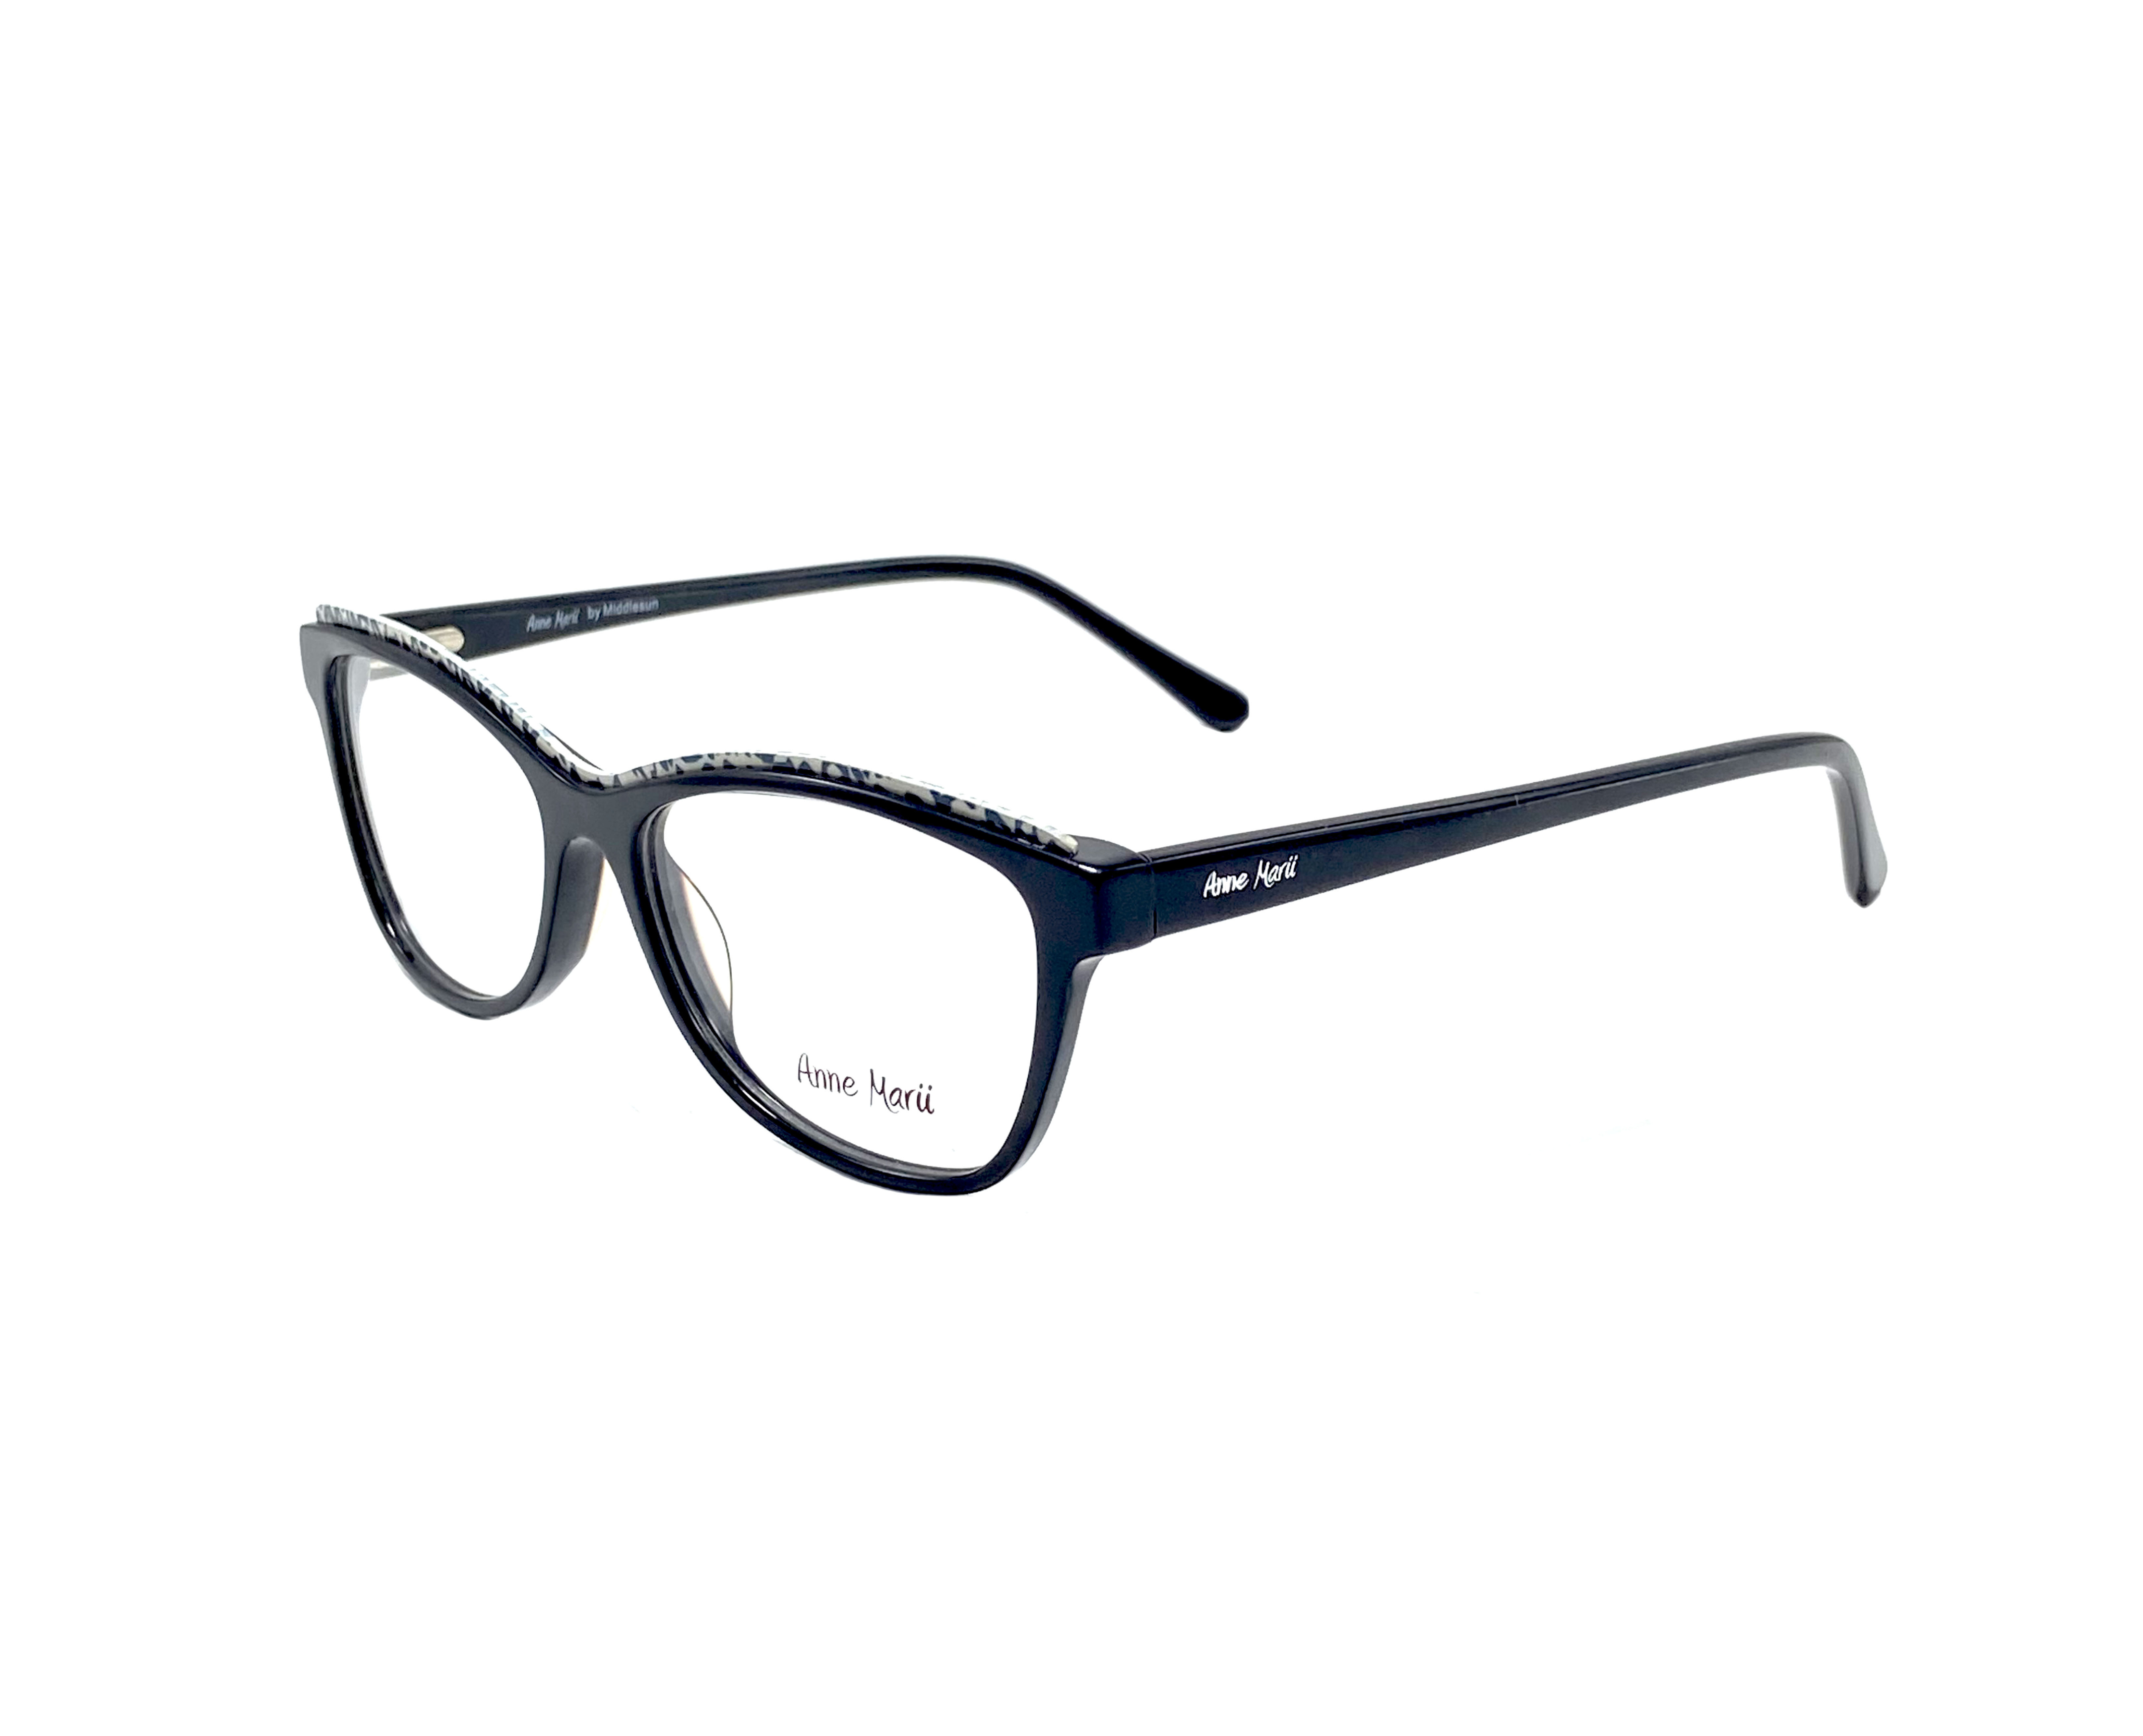 NS Deluxe - 20110 - Black - Eyeglasses